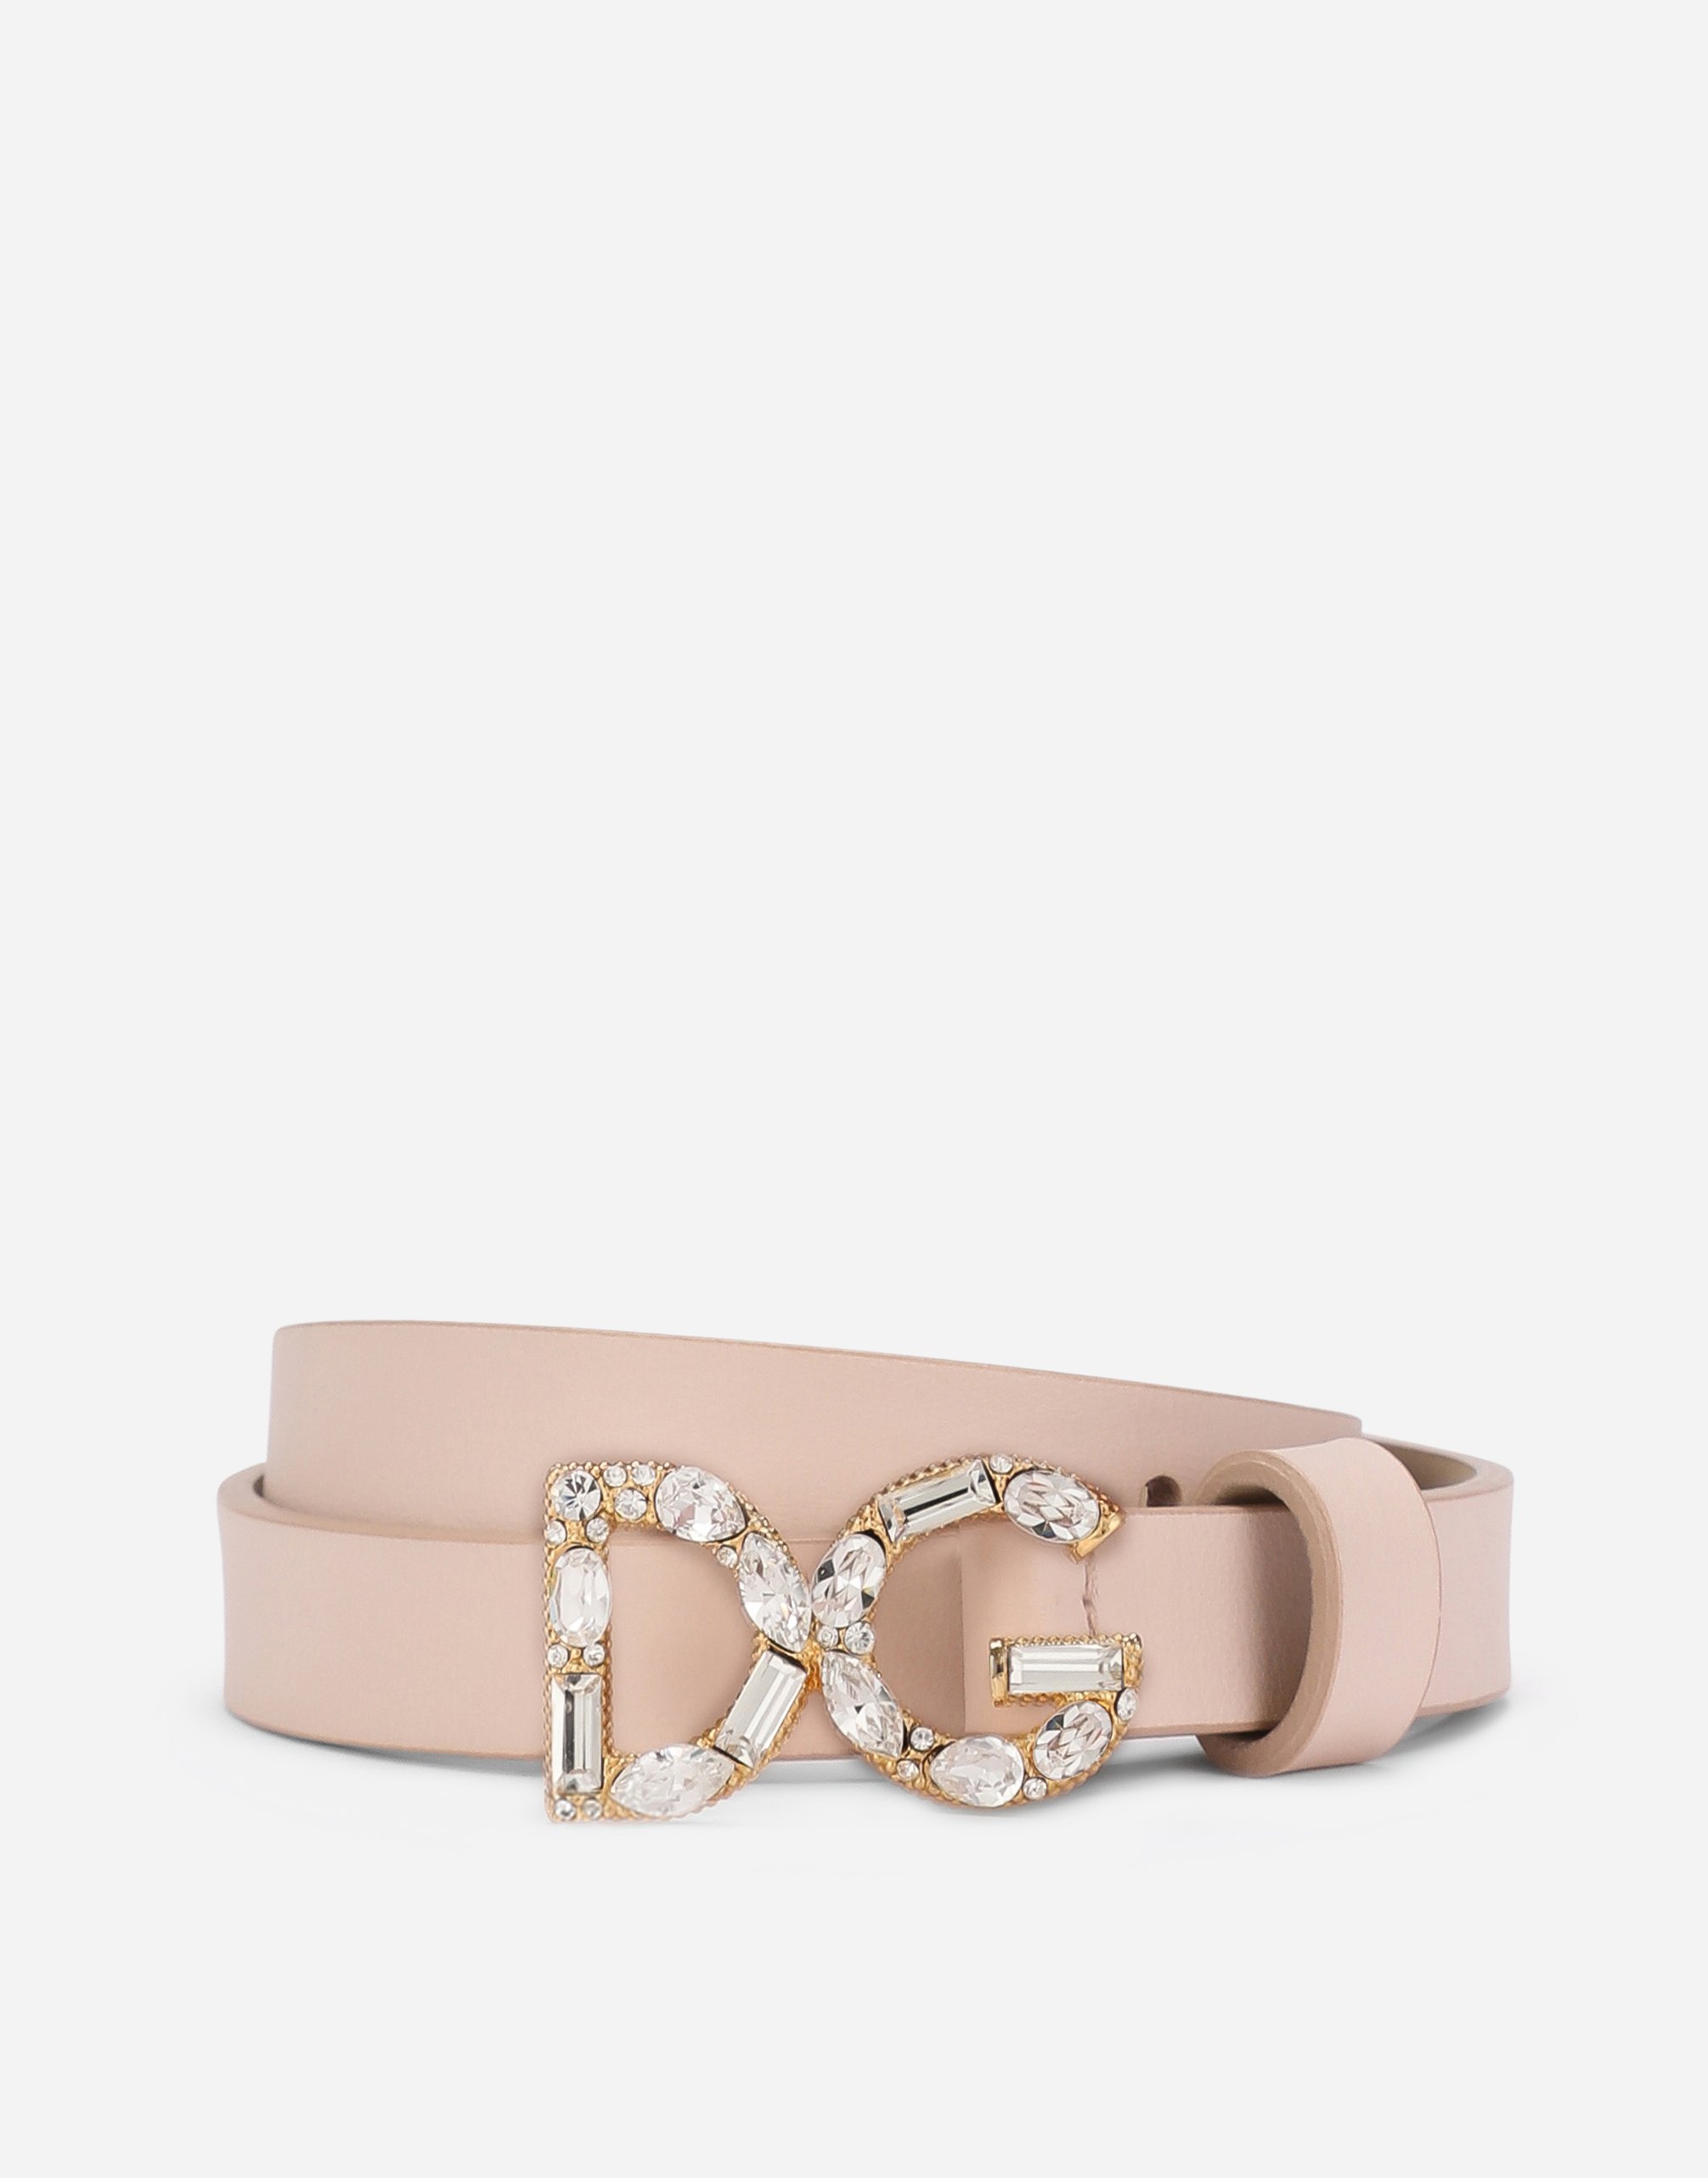 Calfskin belt with crystal-adorned buckle in Pink